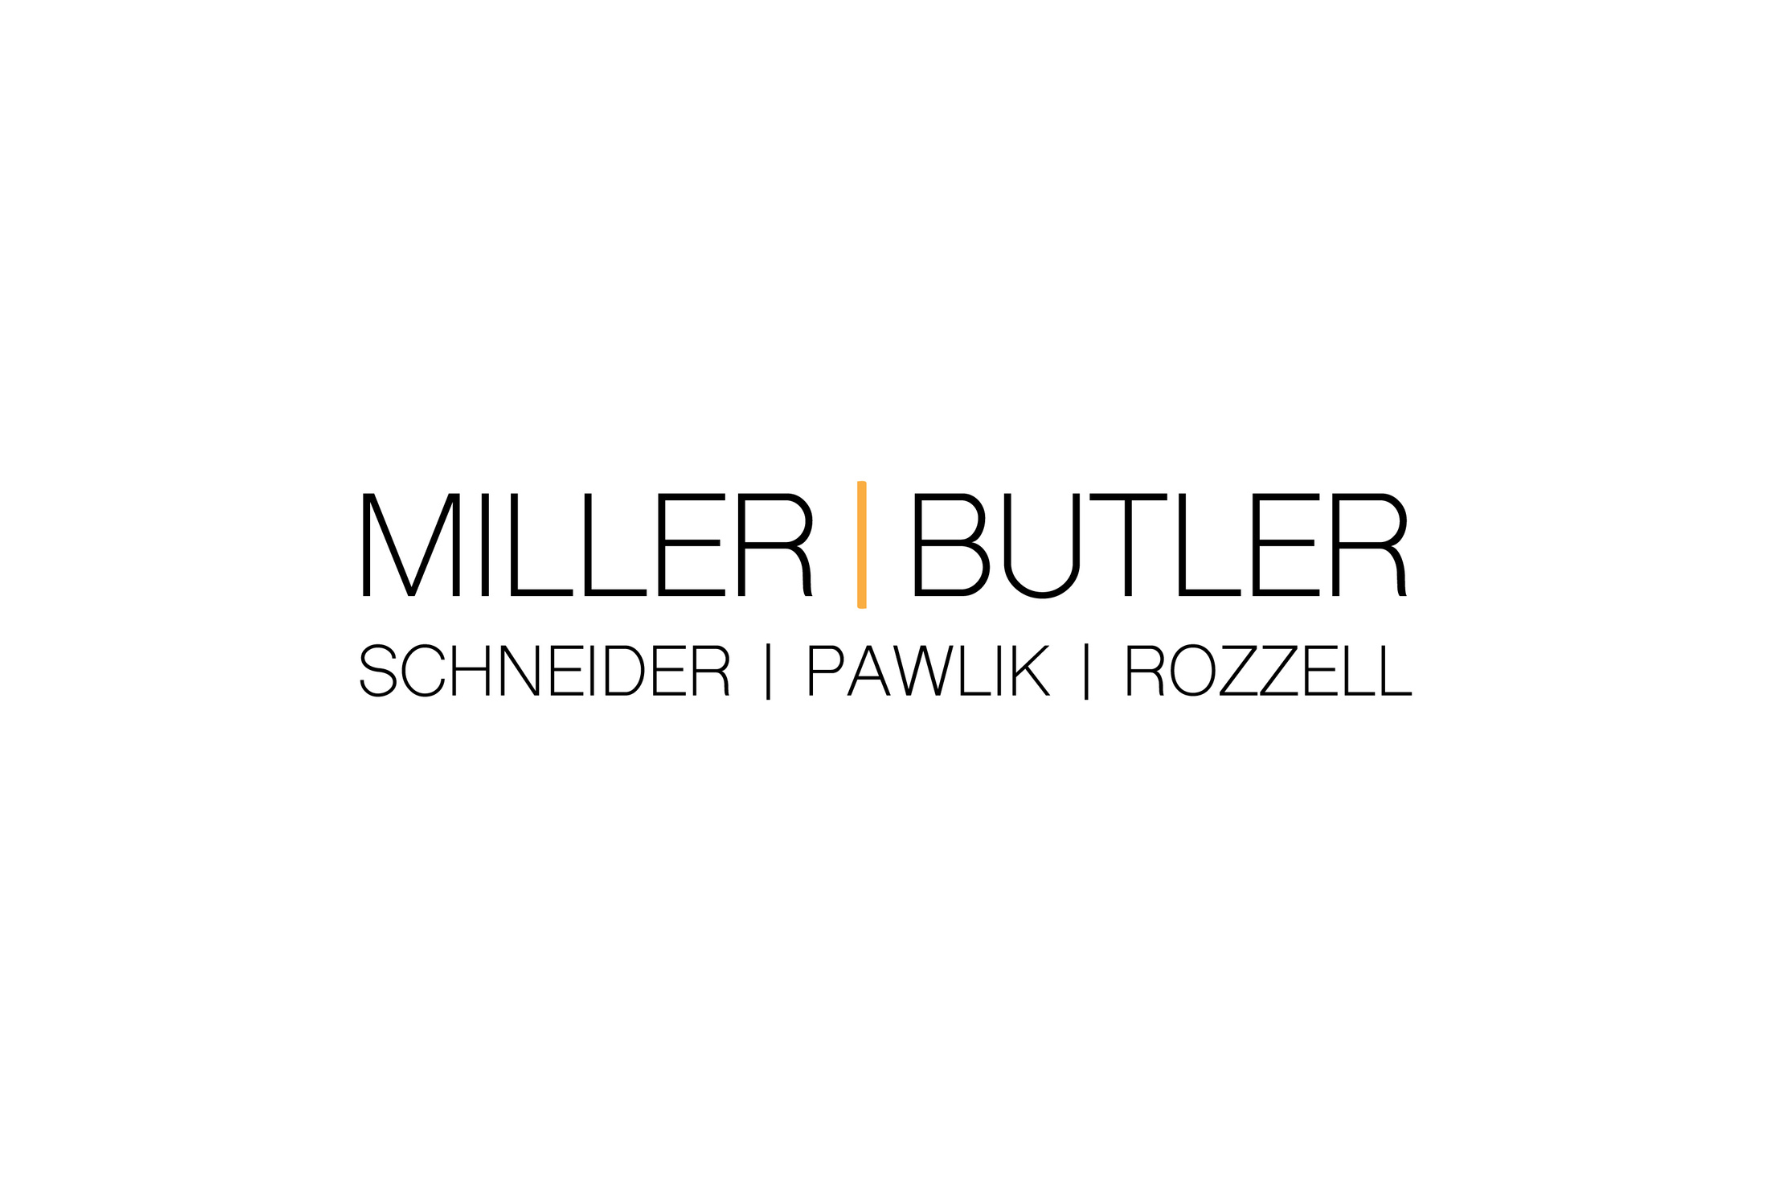 Miller Butler